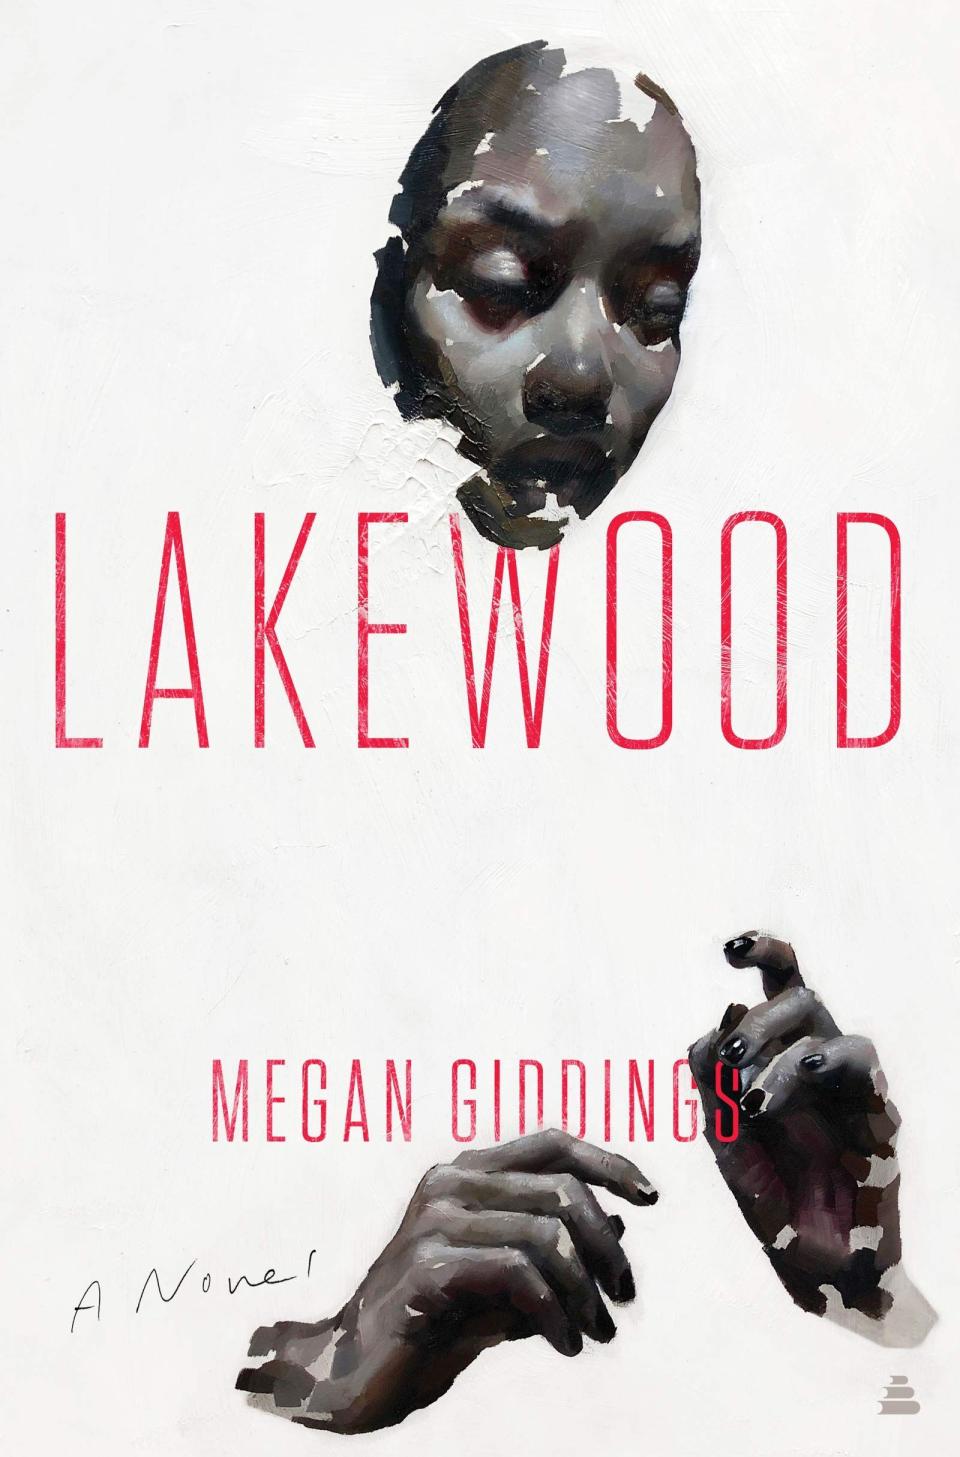 42) ‘Lakewood’ by Megan Giddings